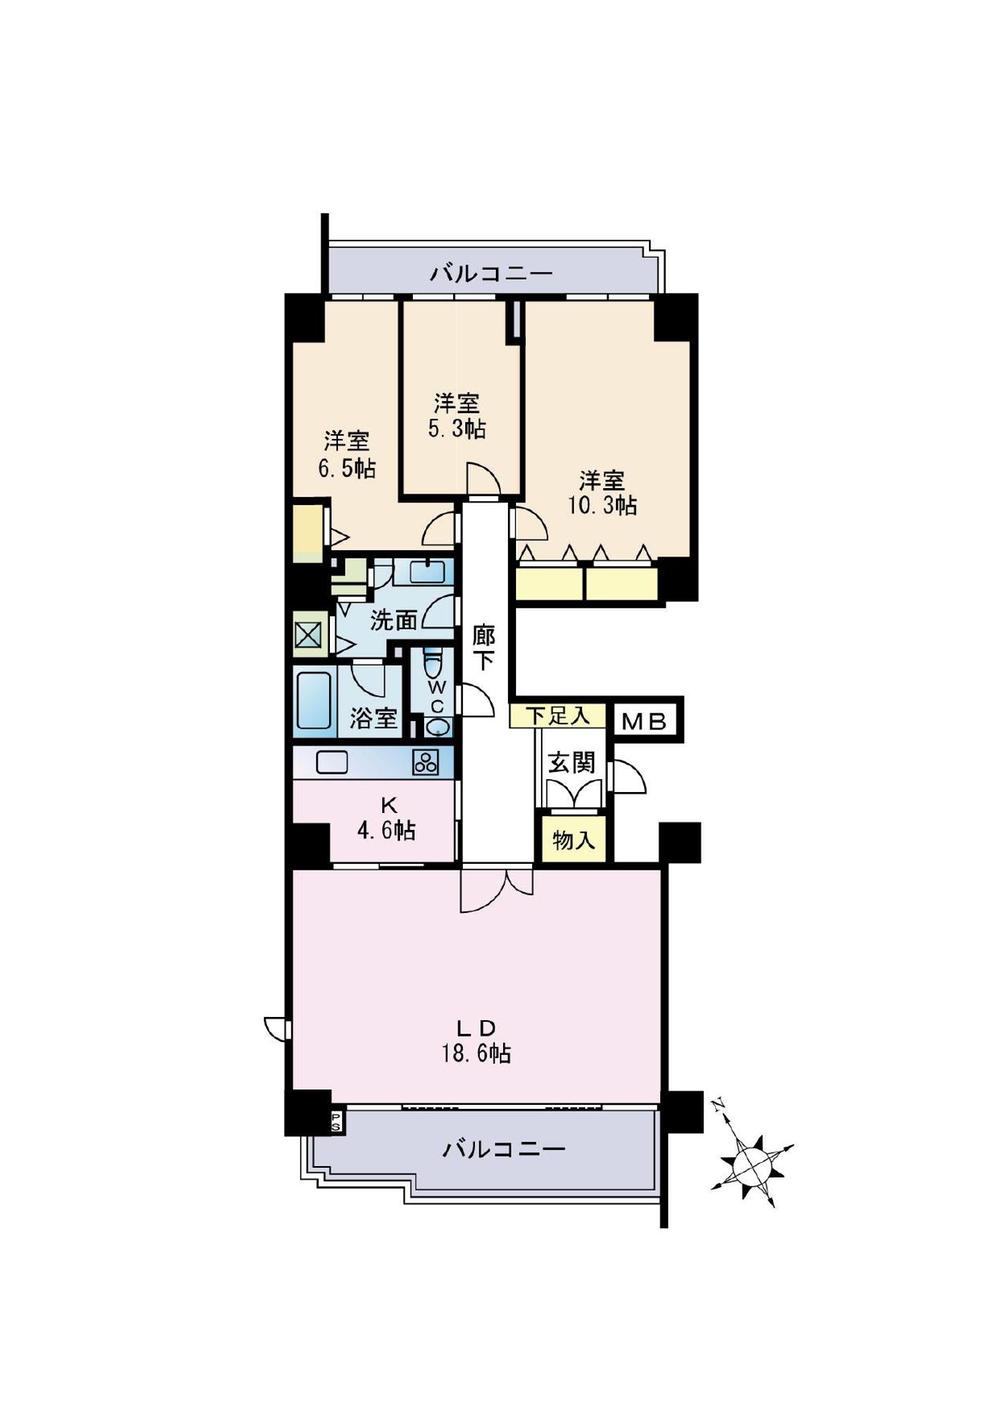 Floor plan. 3LDK, Price 59,800,000 yen, The area occupied 101.8 sq m , Balcony area 18.87 sq m